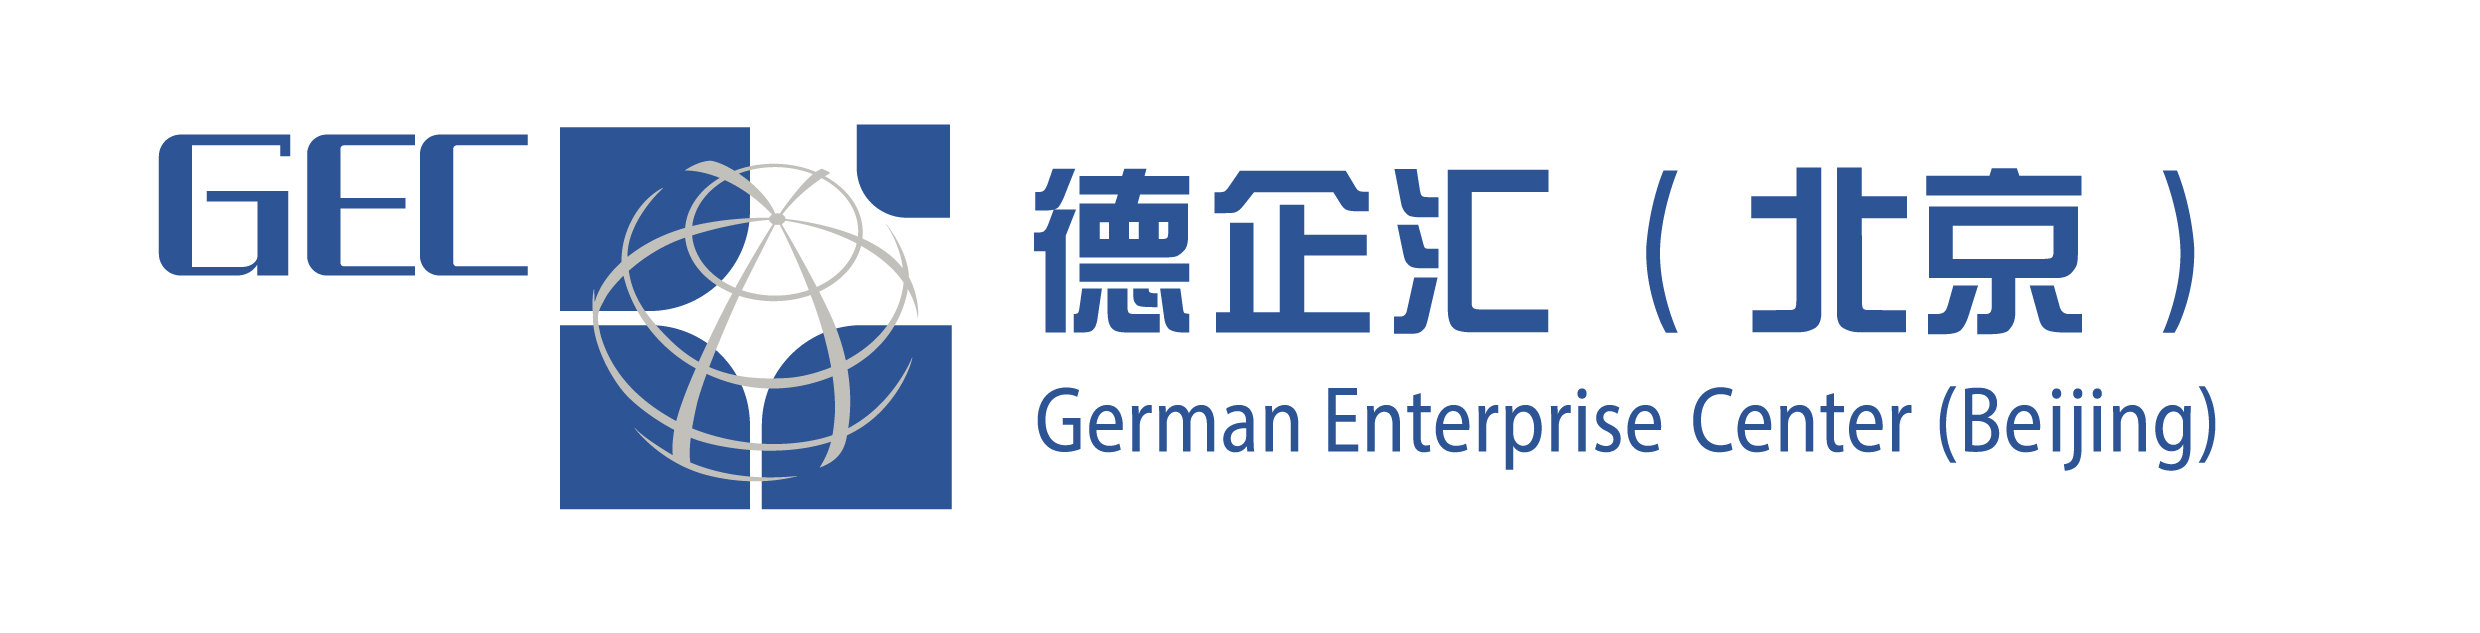 German Enterprise Center (Beijing)